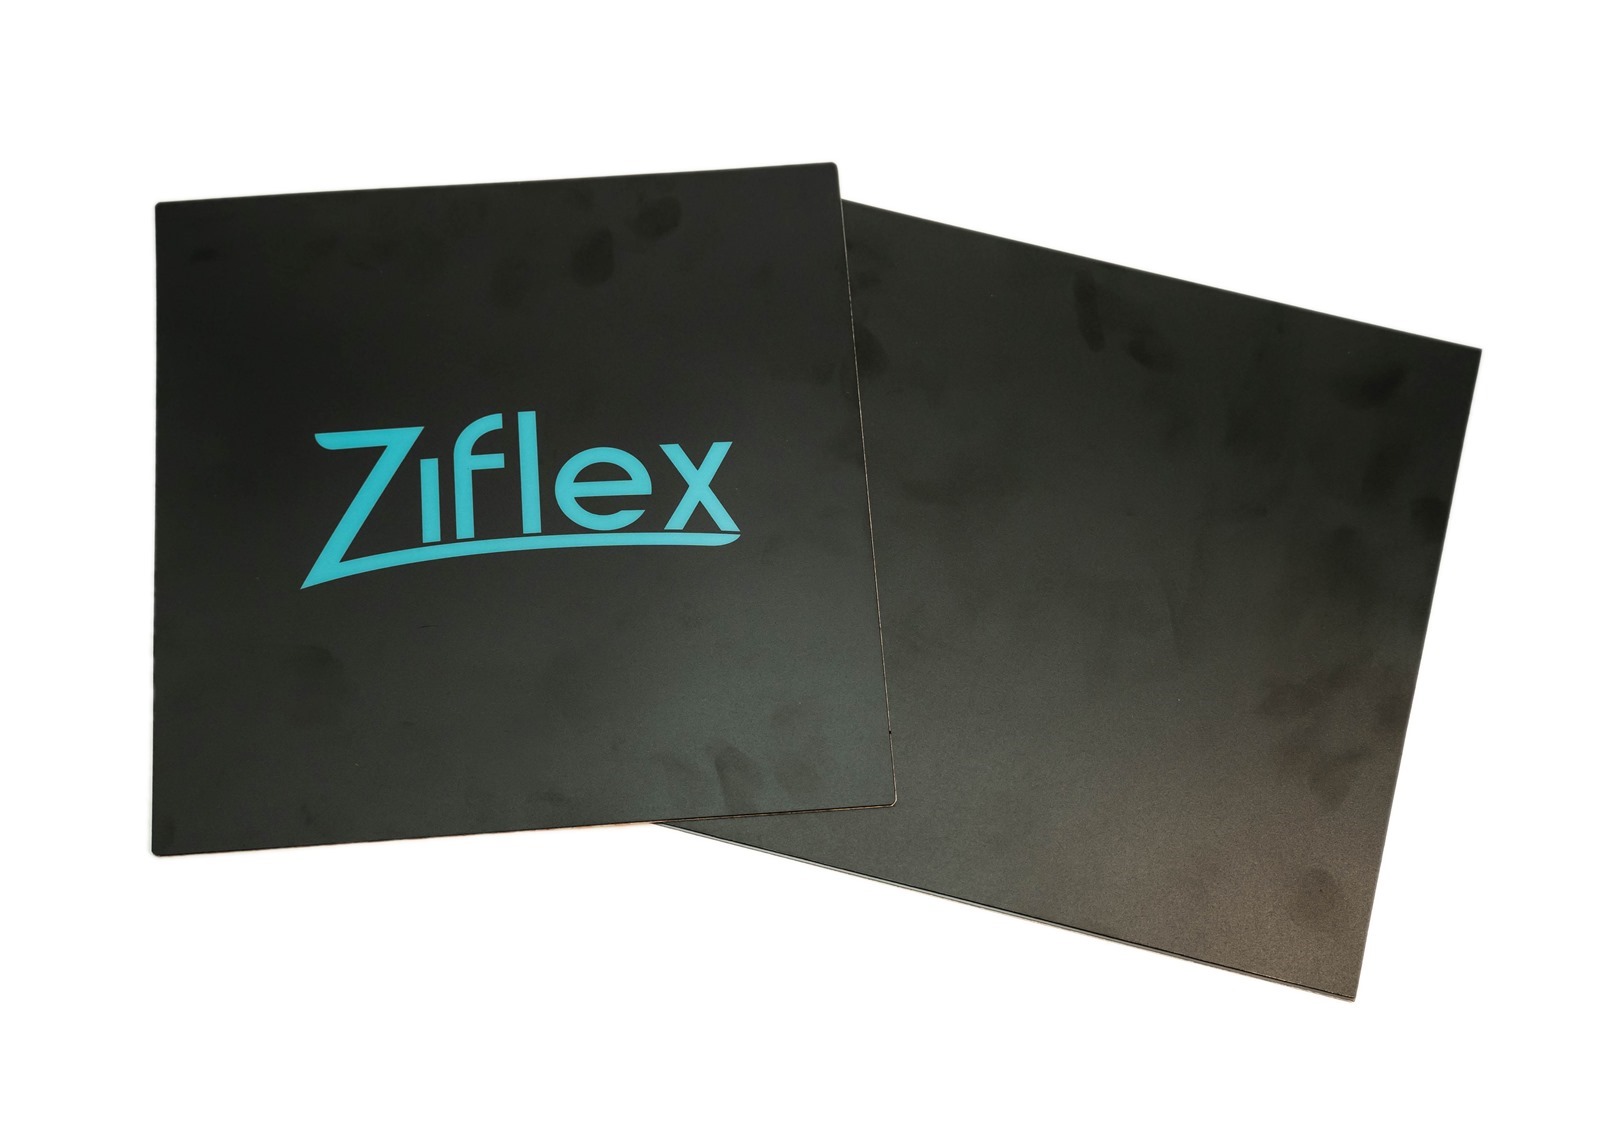 Ziflex 磁性列印底板 &amp; 淘寶無牌版本比較分享 (磁性底板貼膜熱床防翹邊打印貼紙) @3C 達人廖阿輝